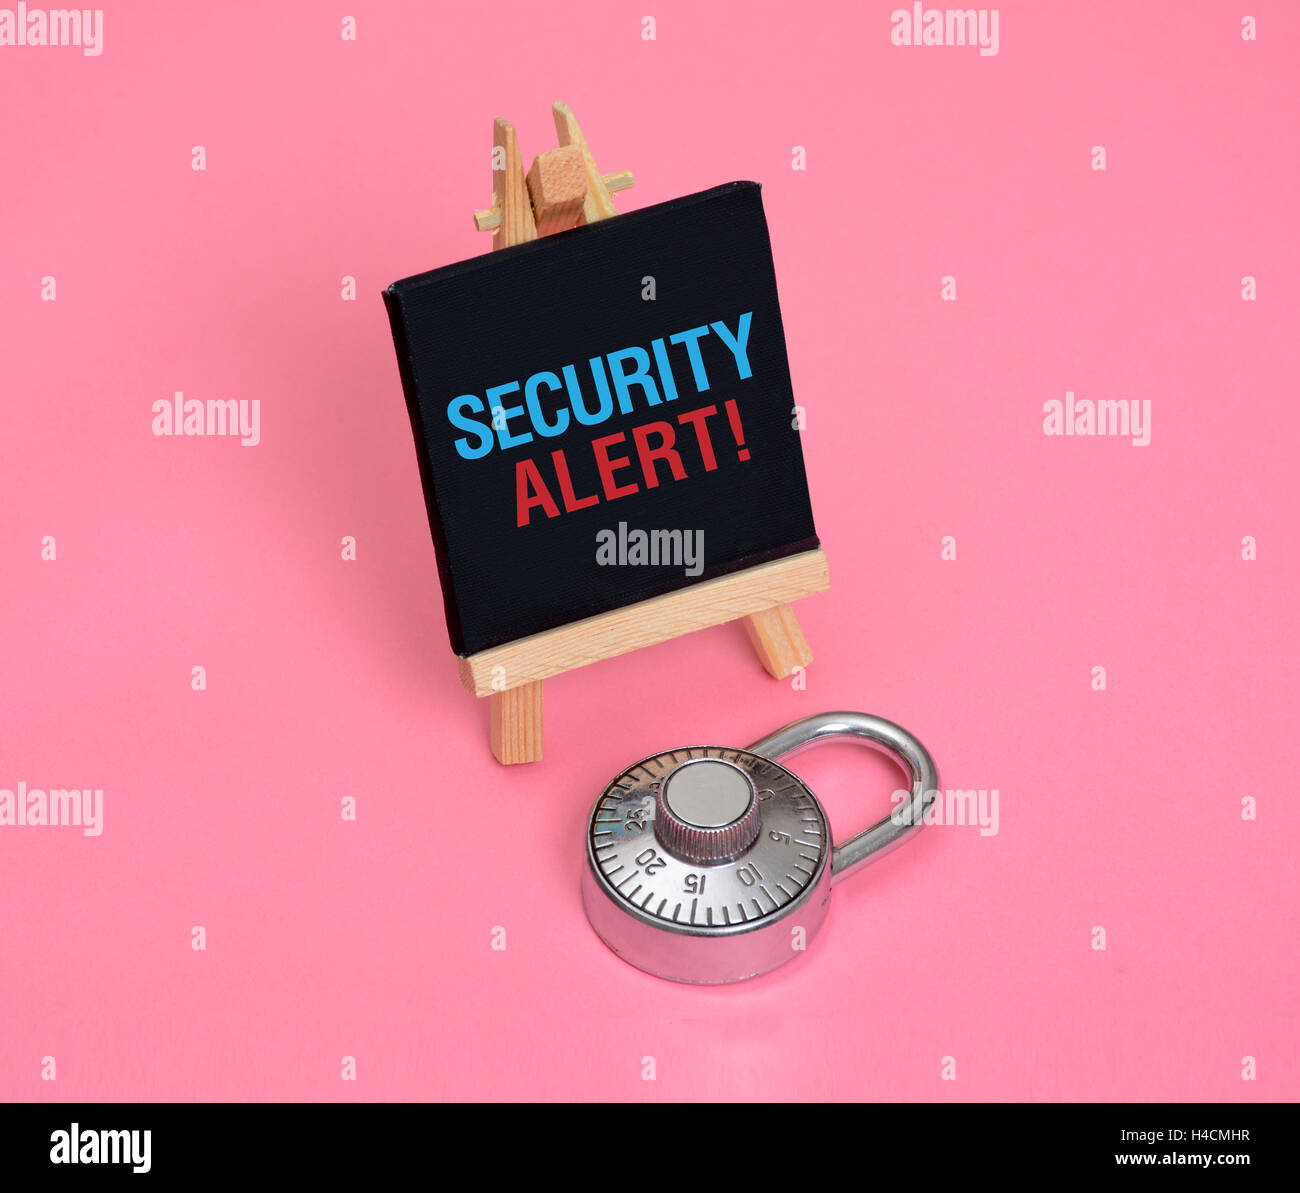 Security Alert Sign with Padlock - concept design. Stock Photo